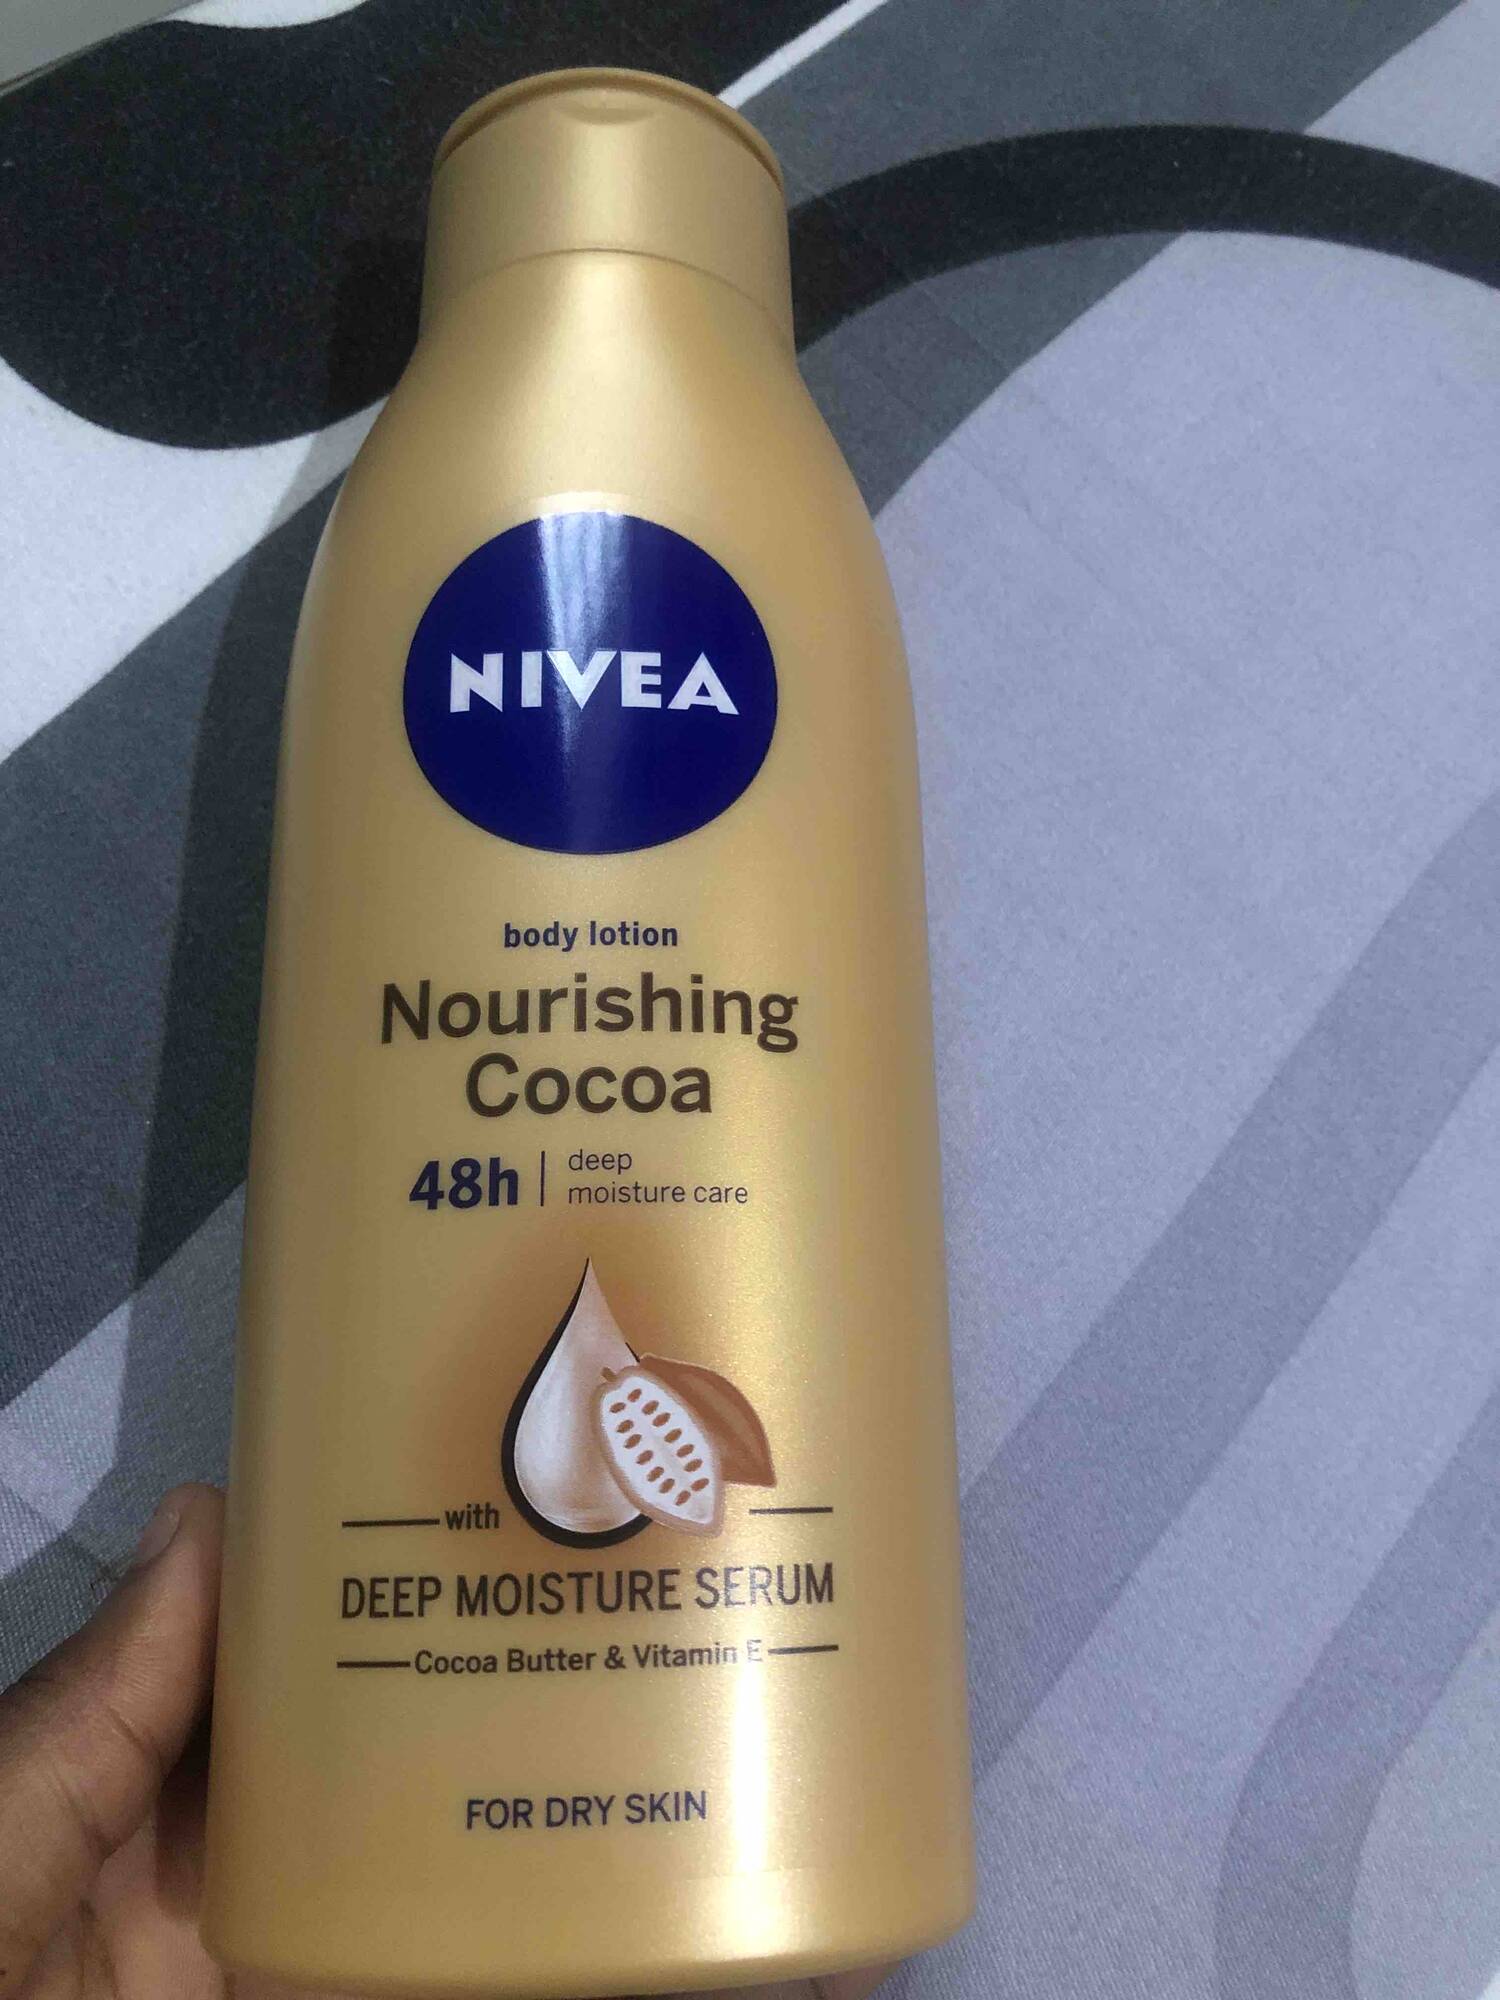 NIVEA - Nourishing cocoa - Body lotion 48h